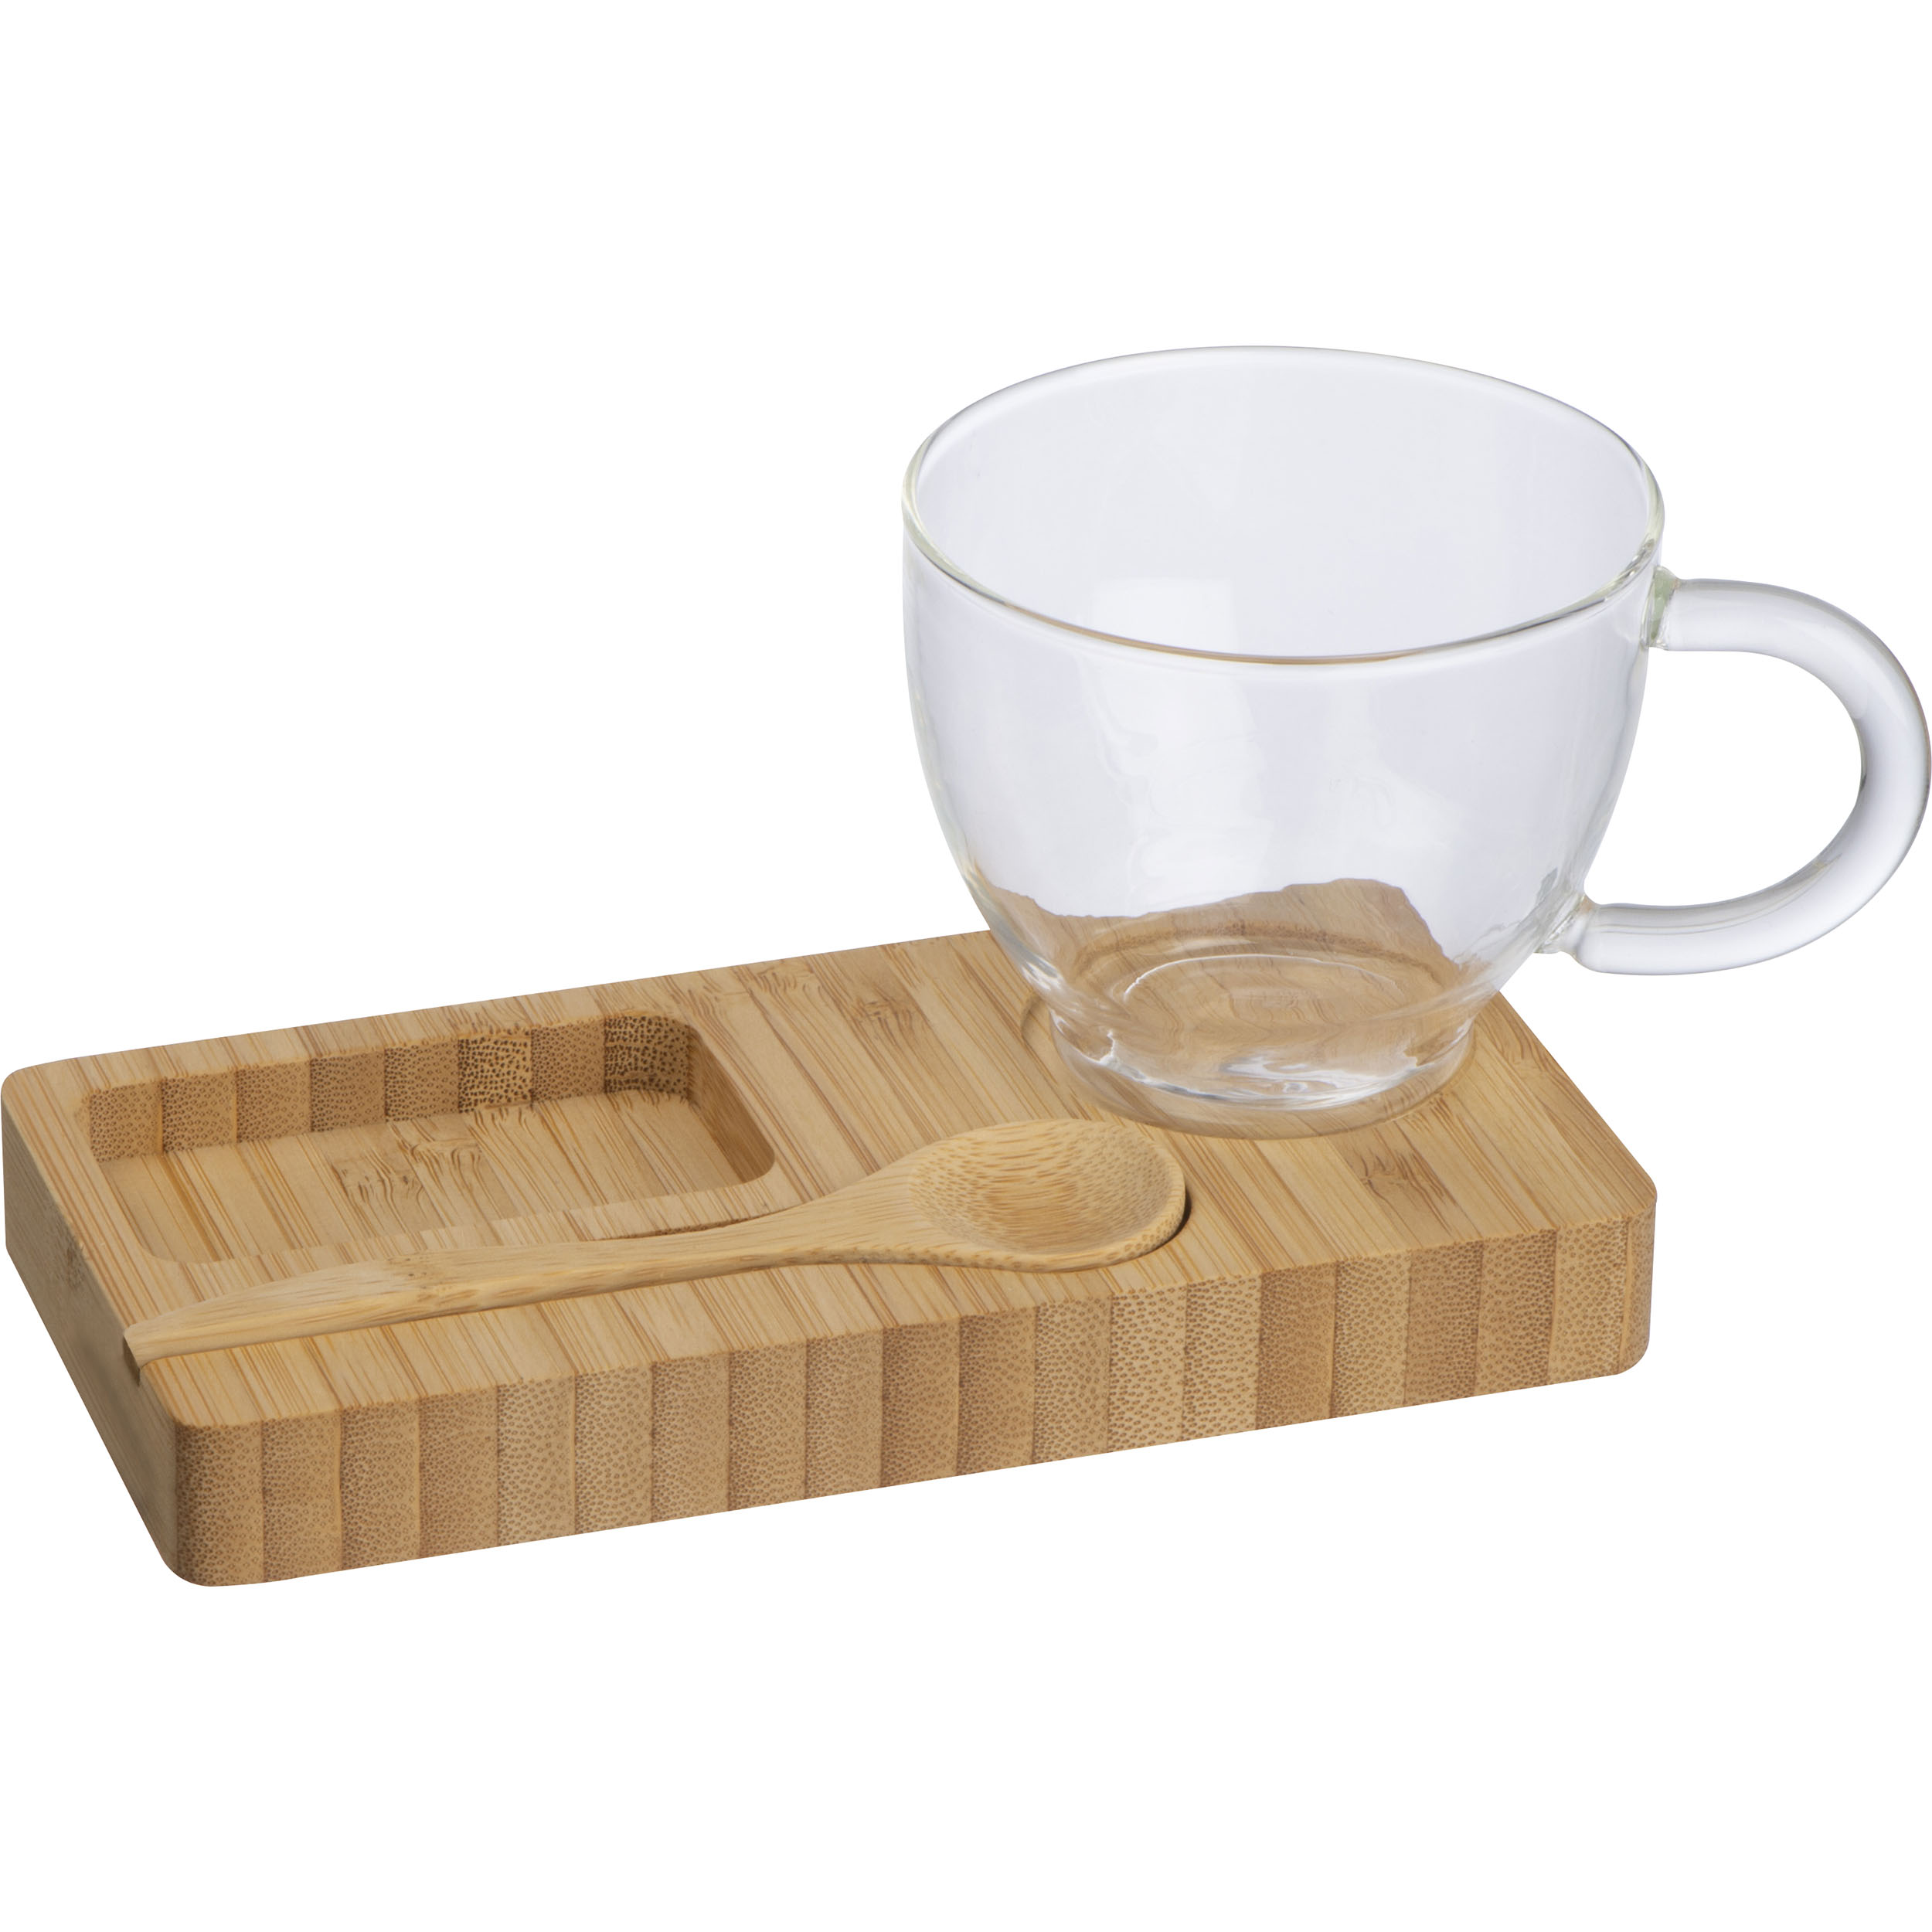 Bamboo Tray with Spoon and Glass Mug